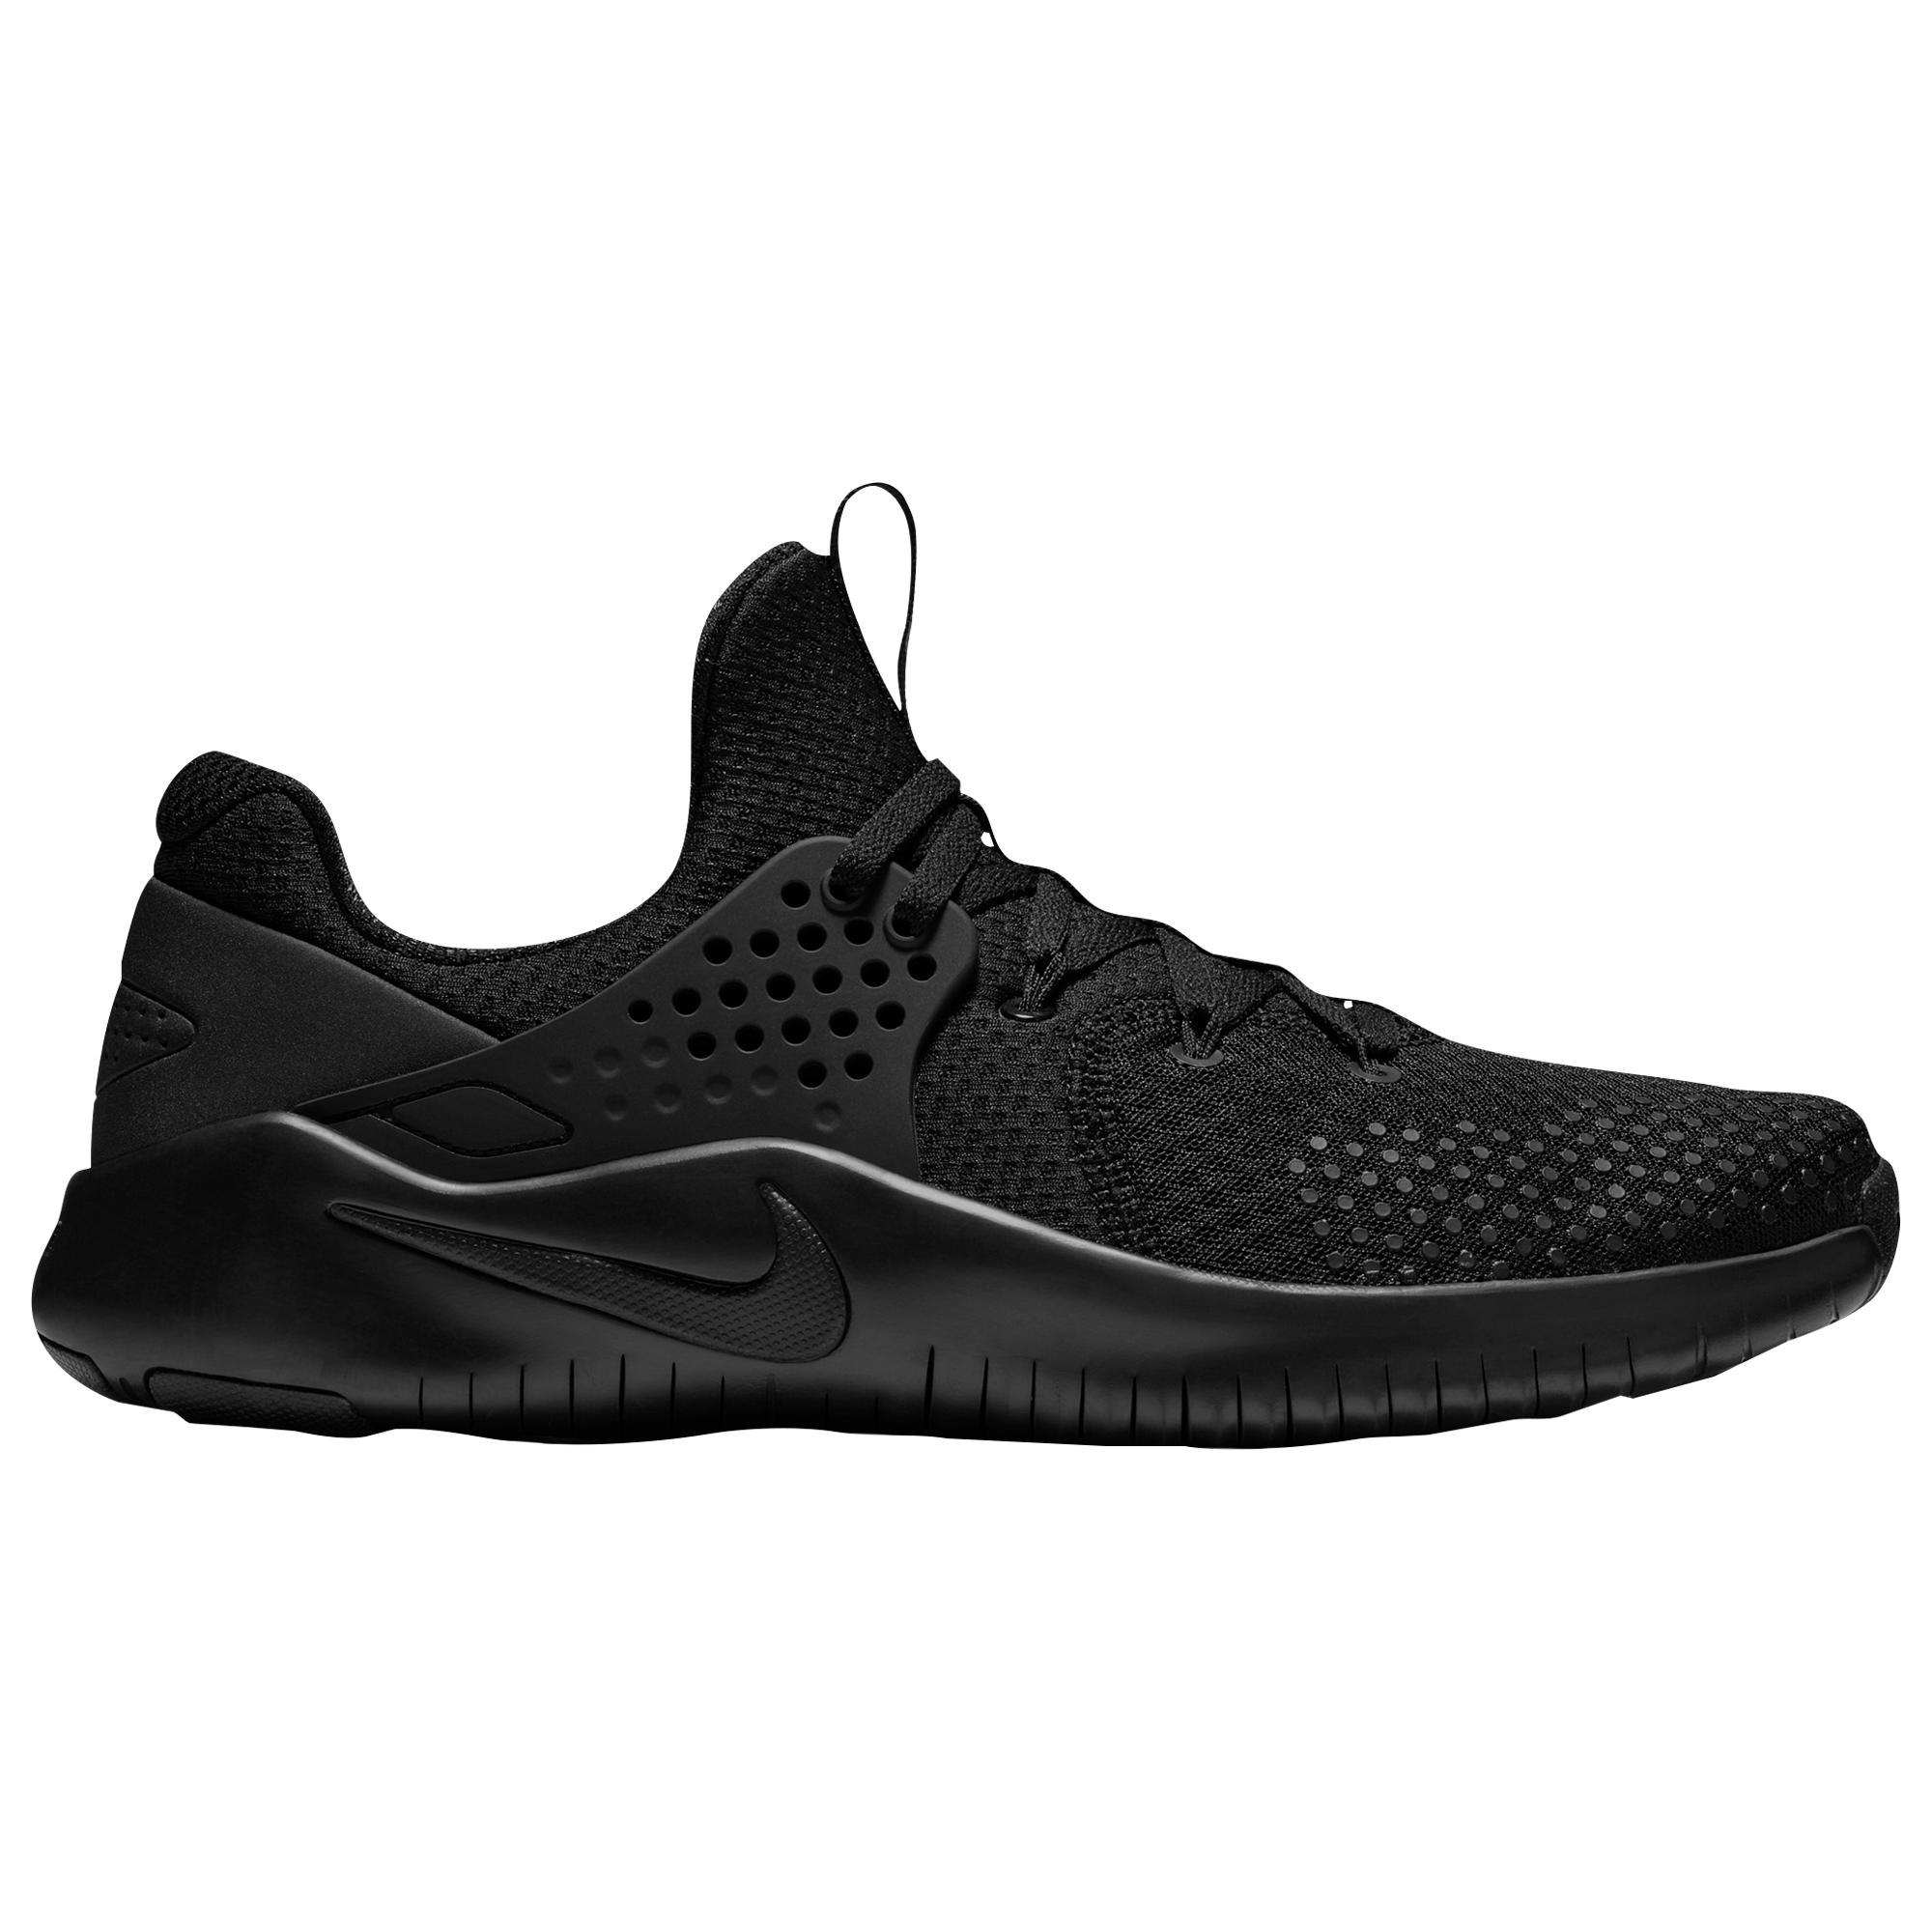 Nike Rubber Free Trainer V8 in Black 